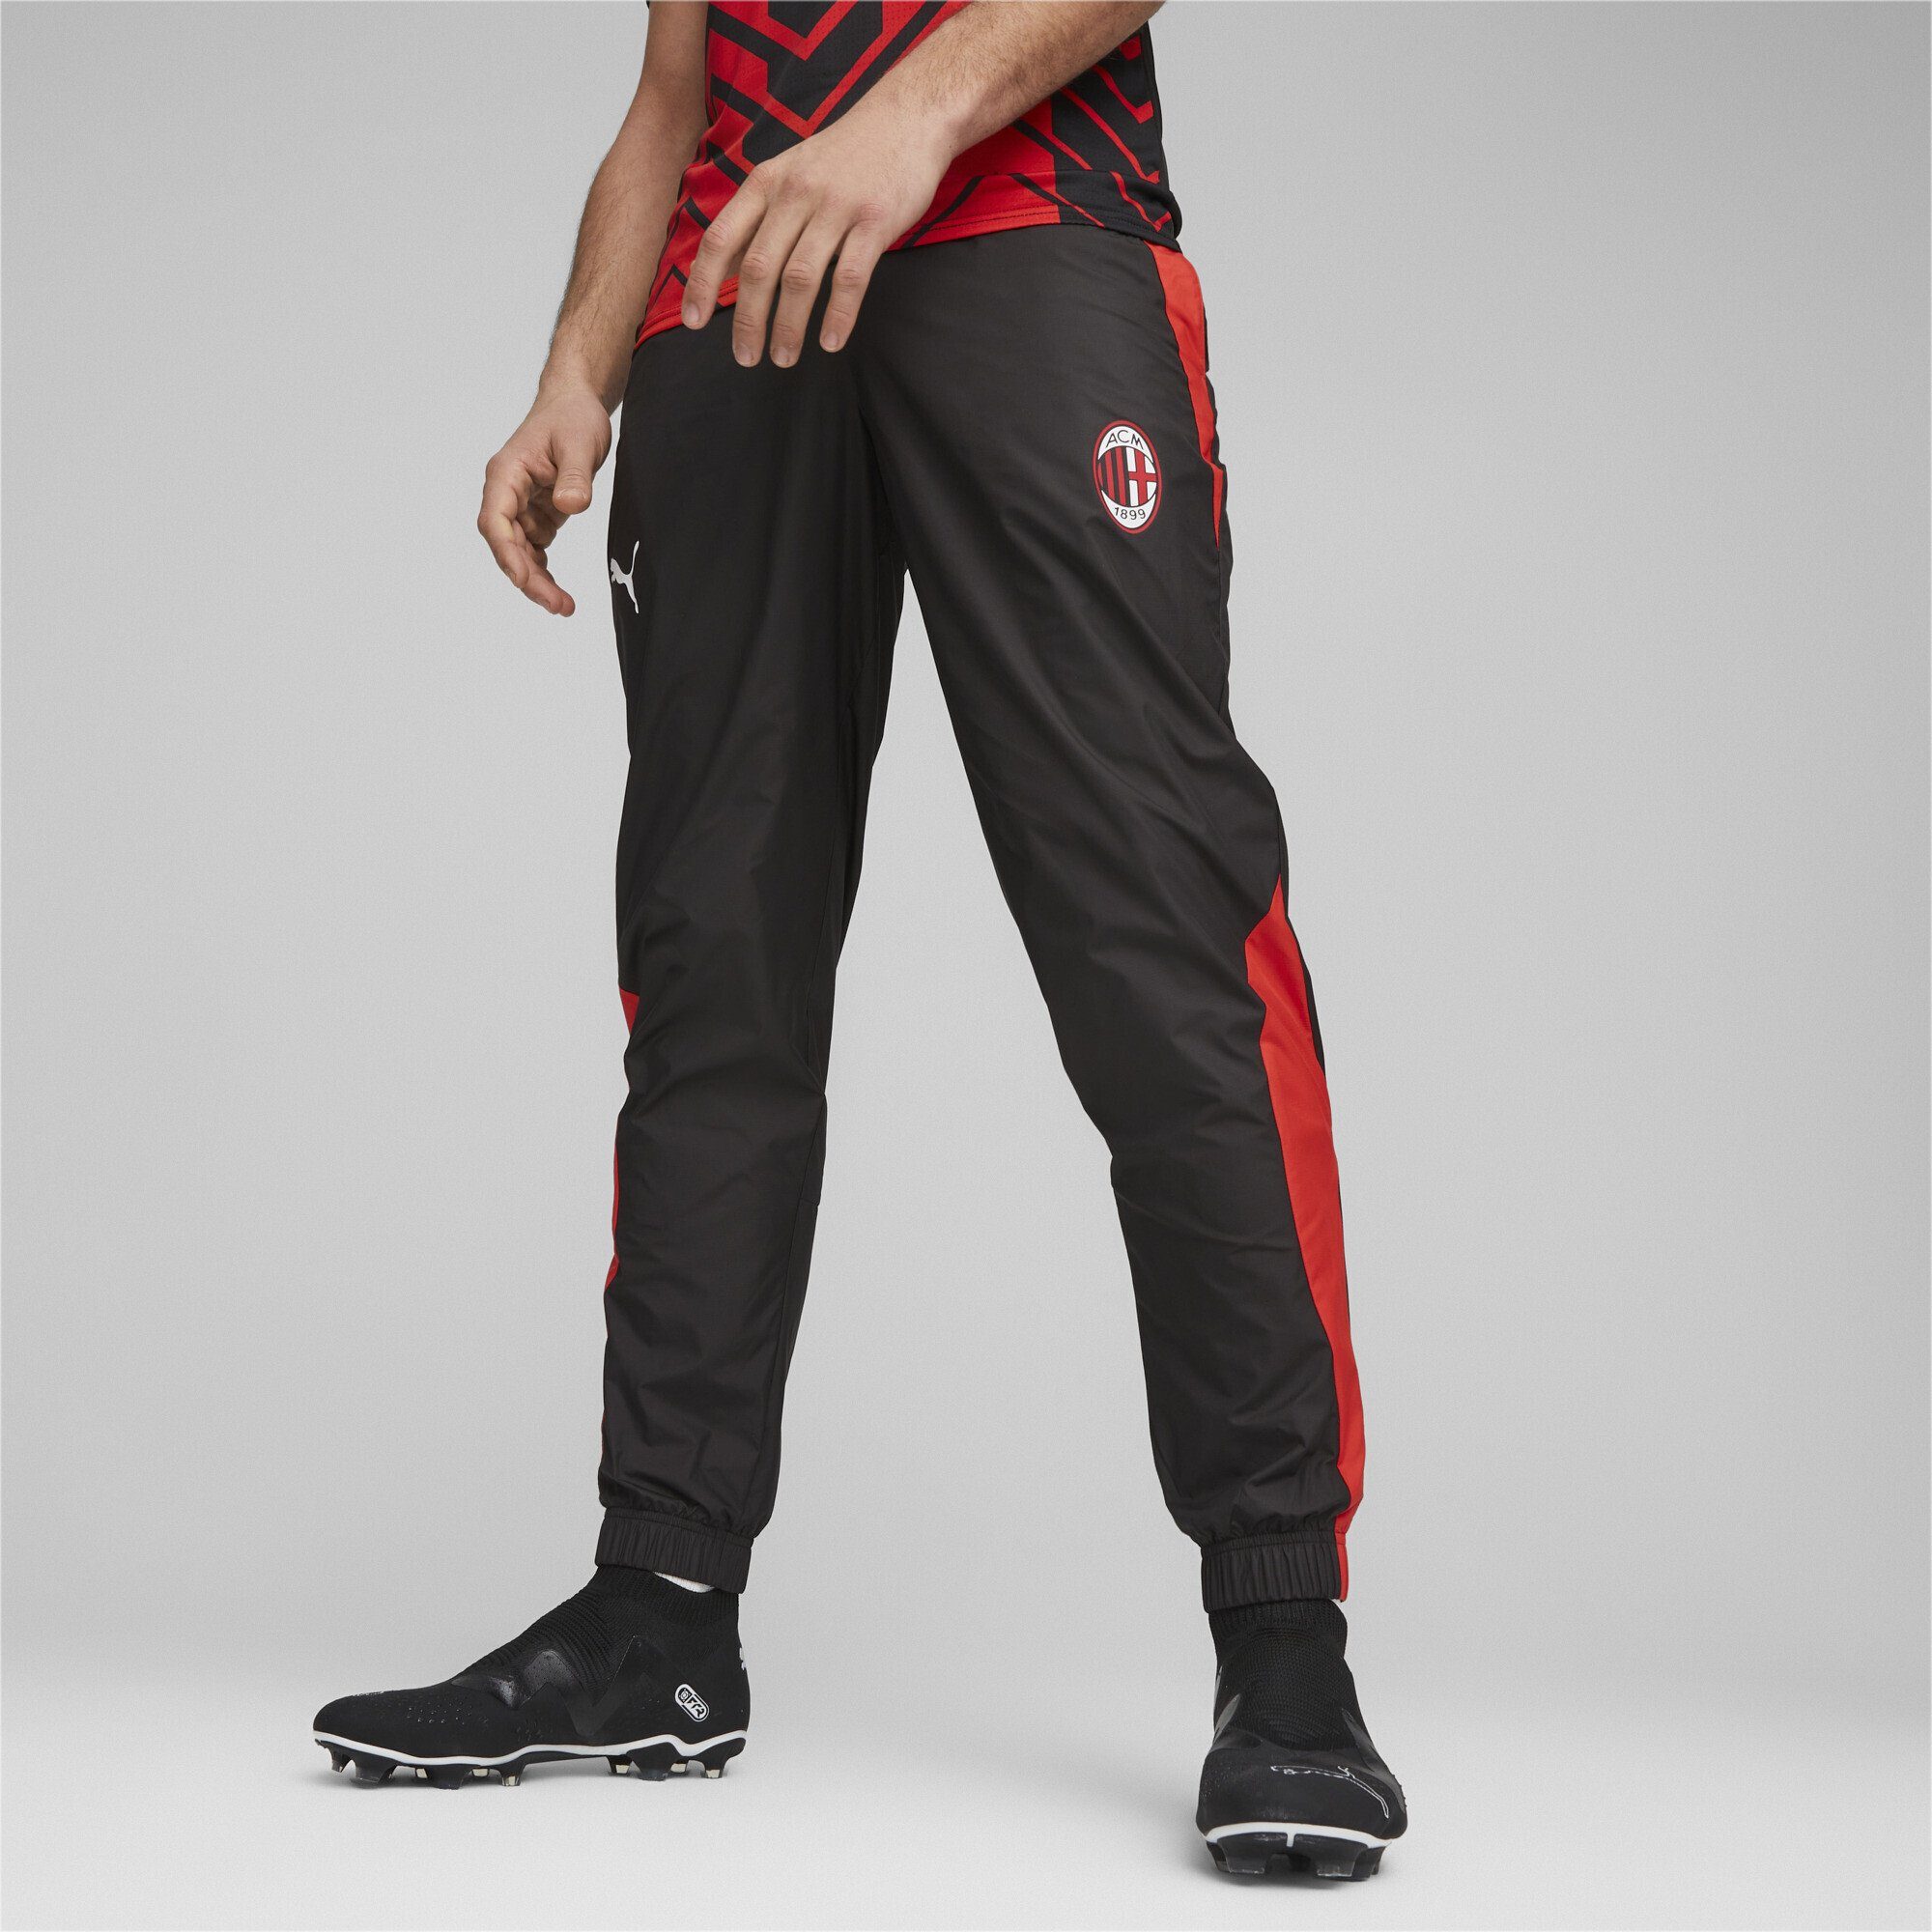 PUMA Sporthose AC Milan Hose All gewebte For Football Red Herren Prematch Black Time